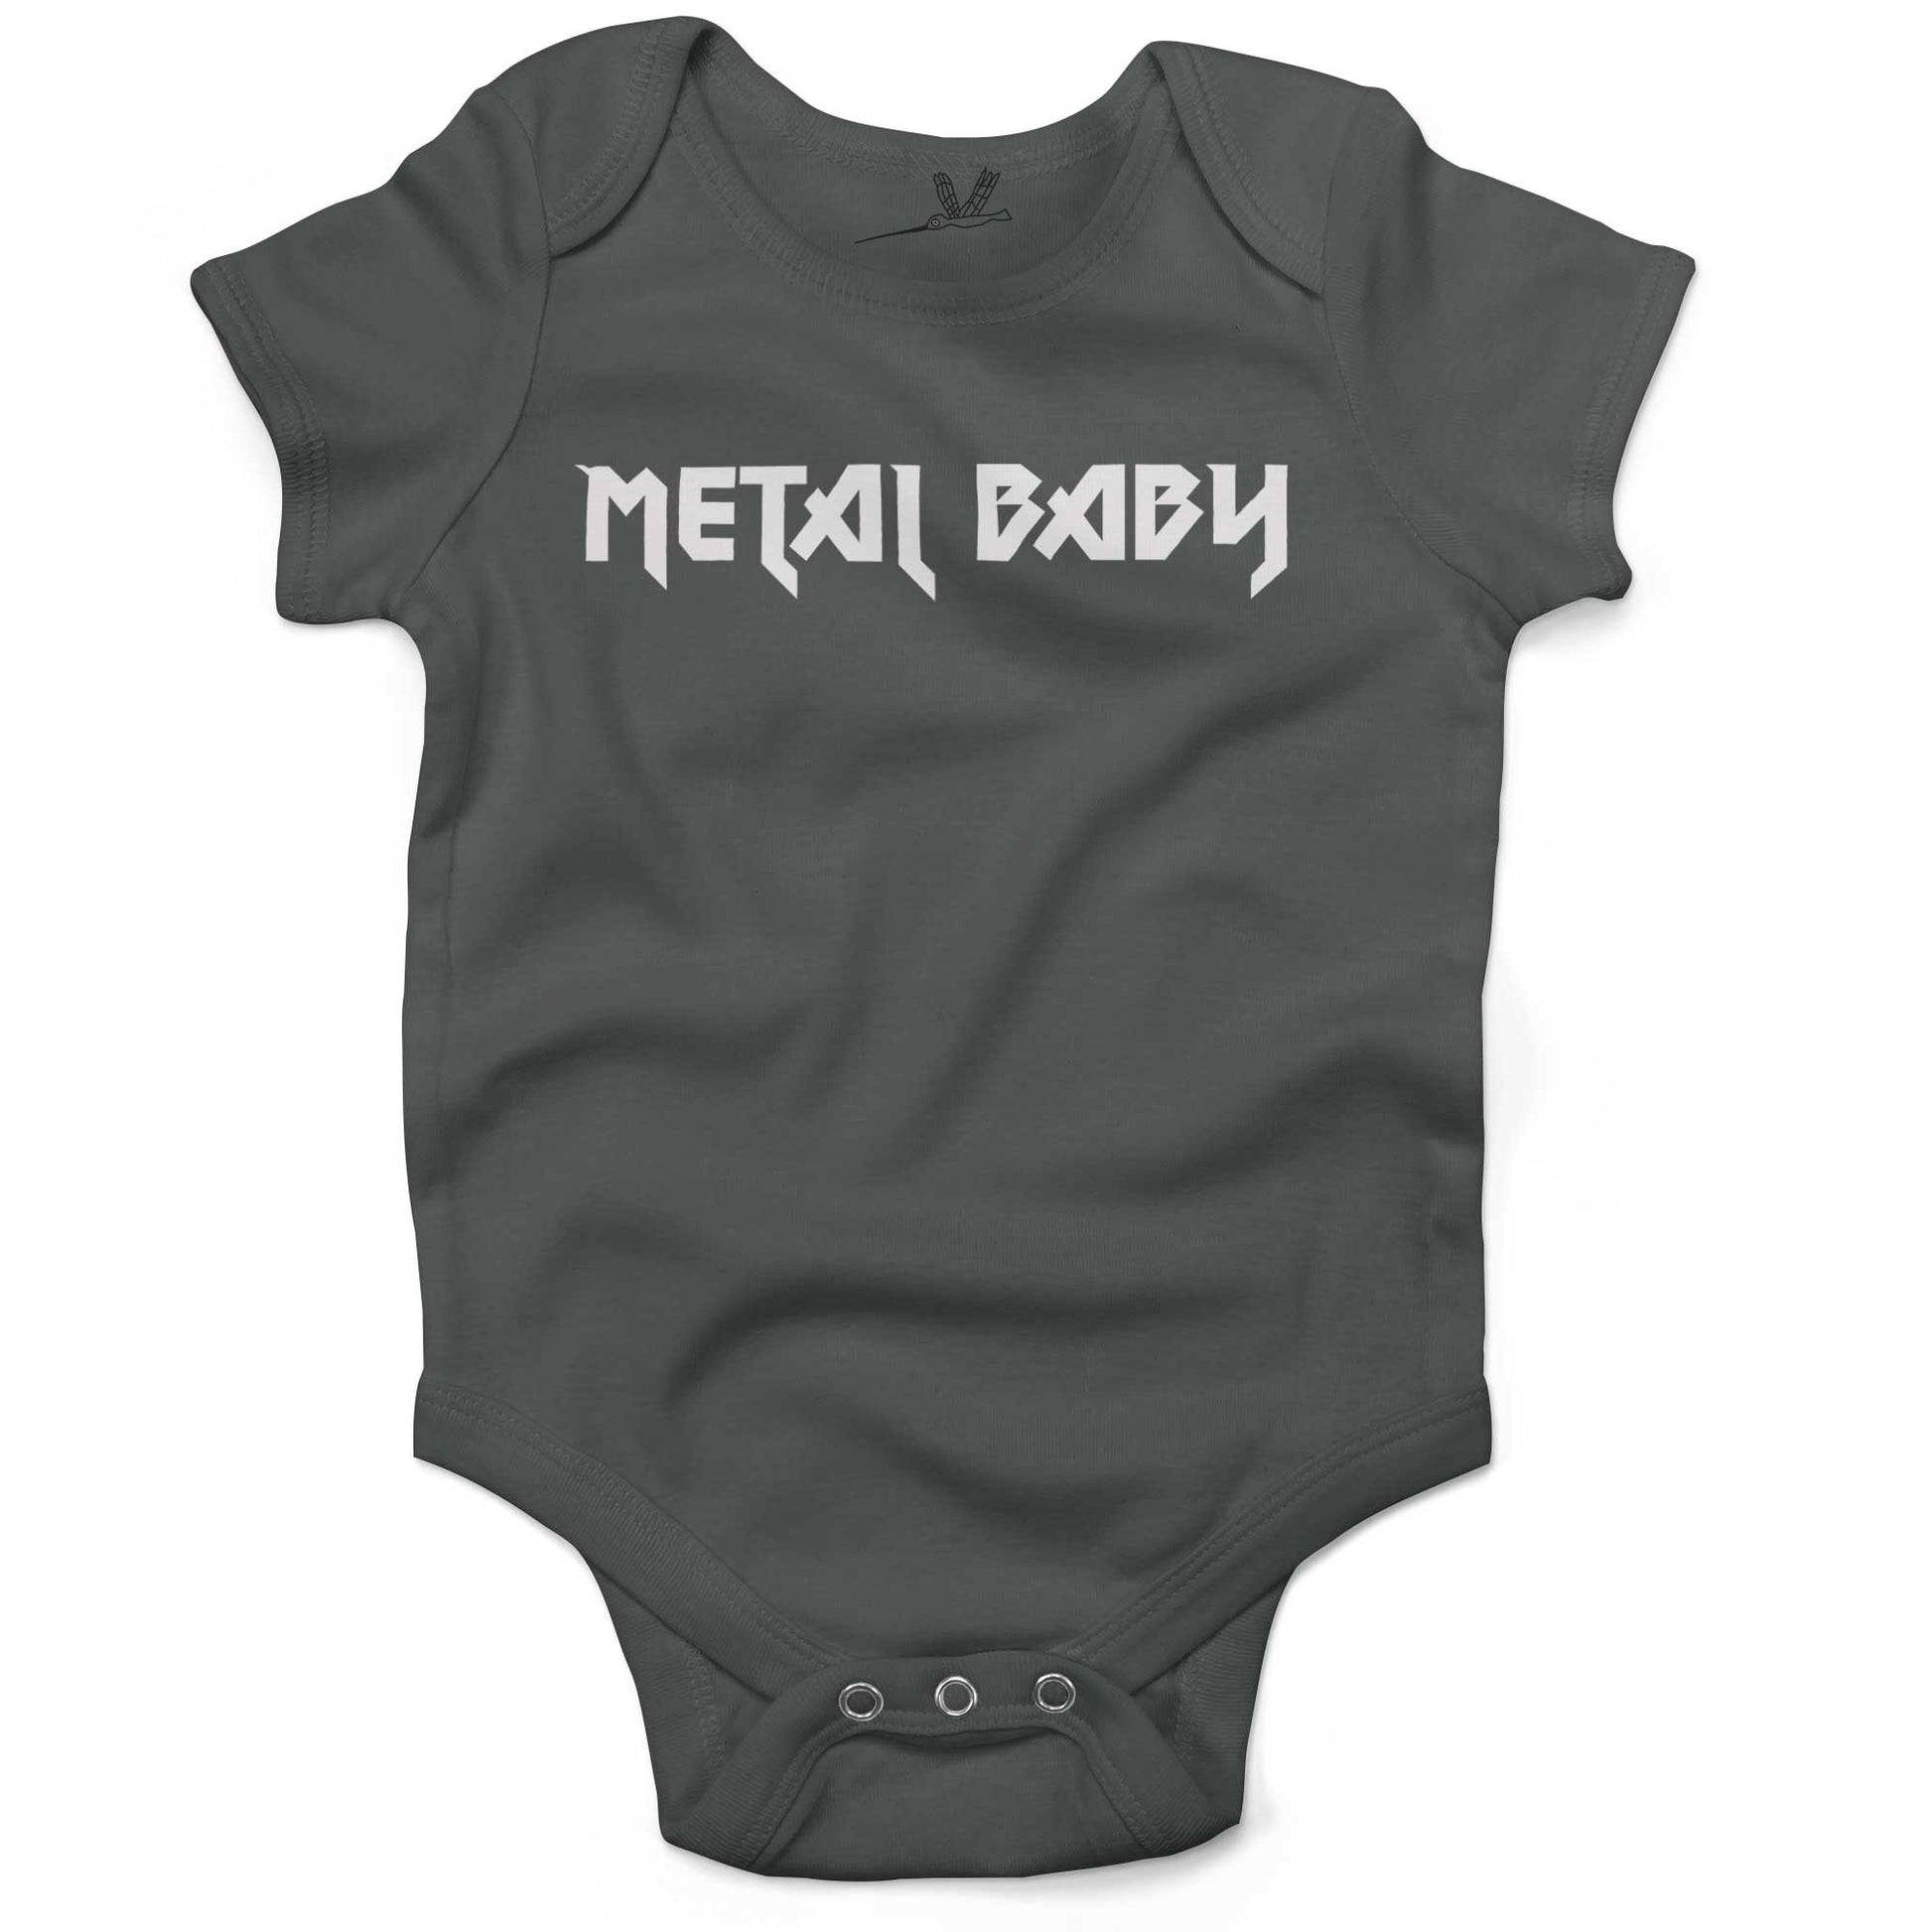 Metal Baby Infant Bodysuit or Raglan Baby Tee-Organic Asphalt-3-6 months